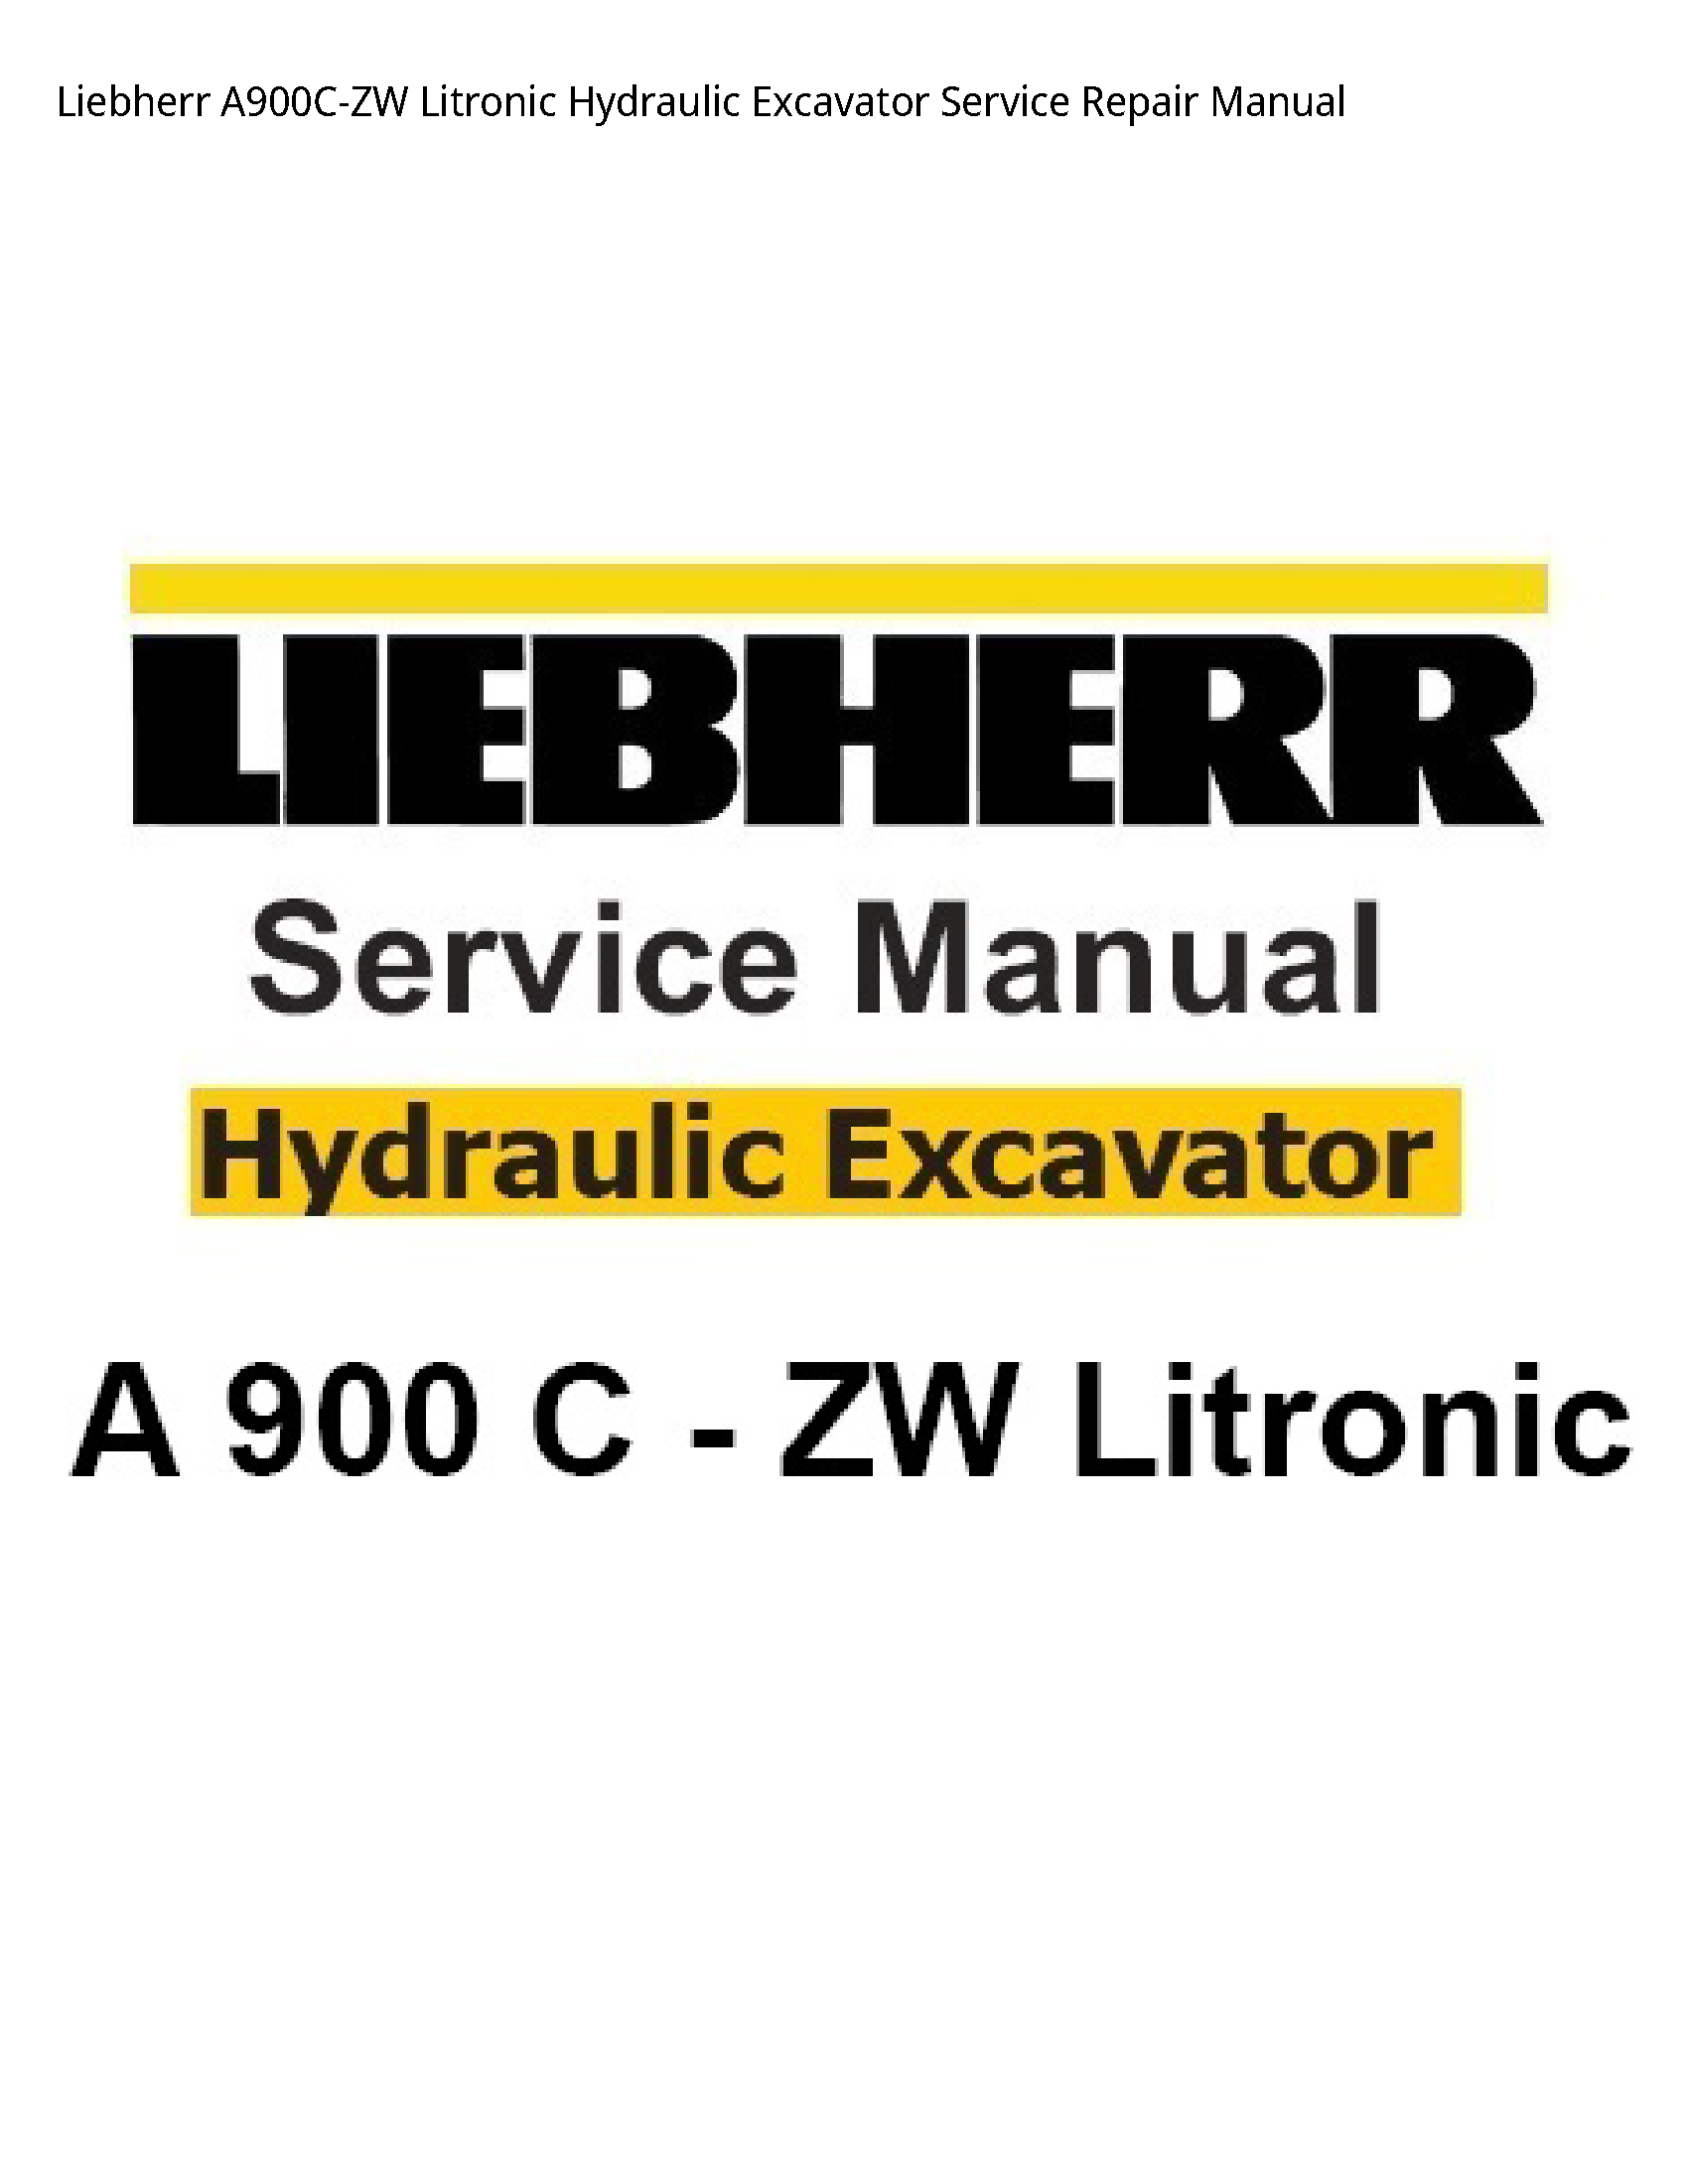 Liebherr A900C-ZW Litronic Hydraulic Excavator manual